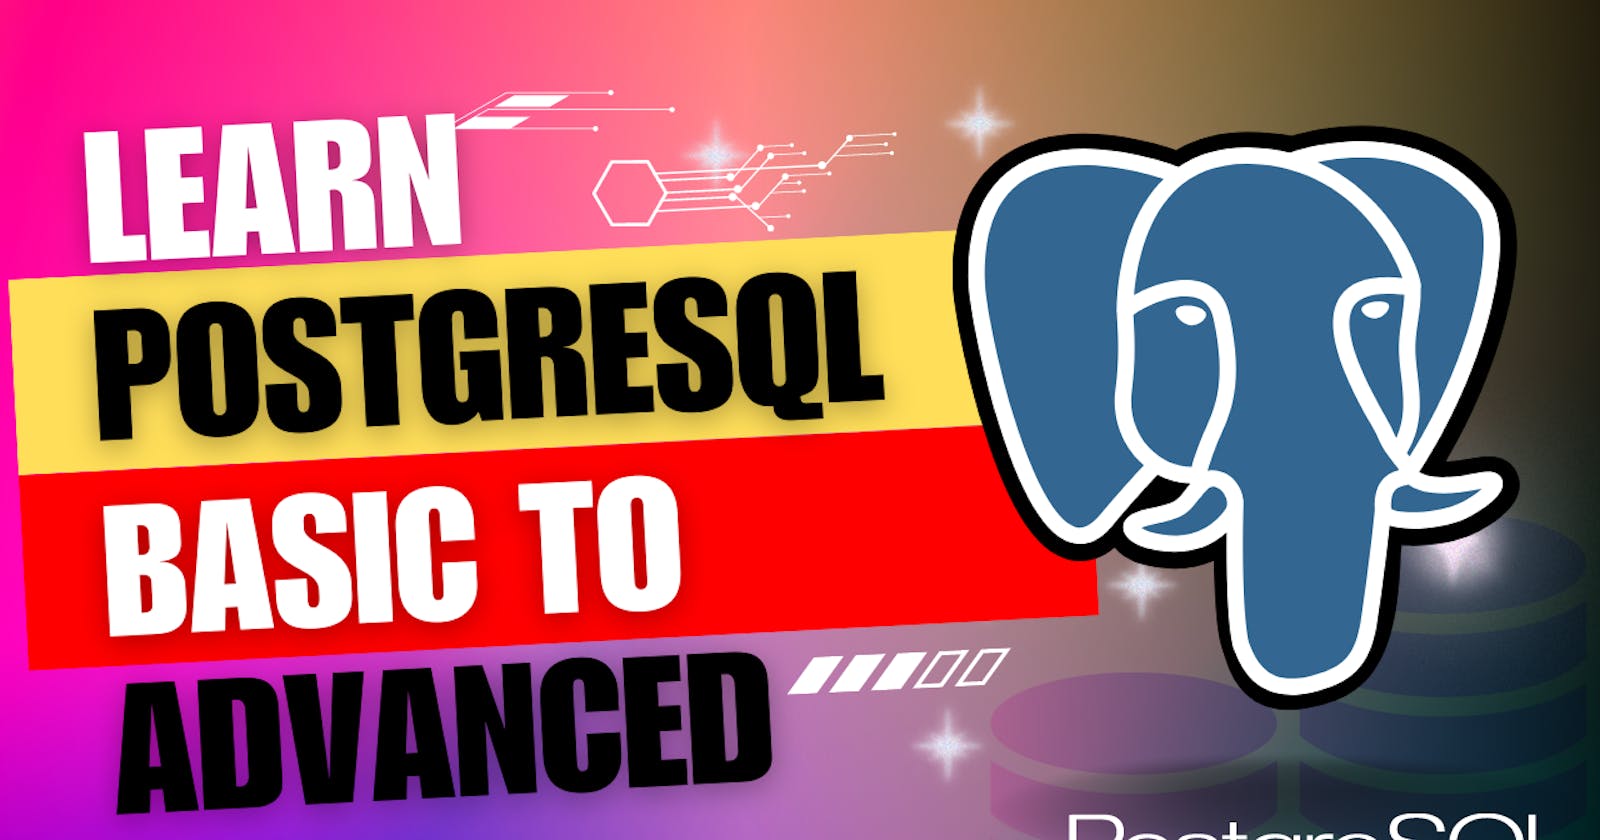 Learn PostgreSQL  for basic to advance